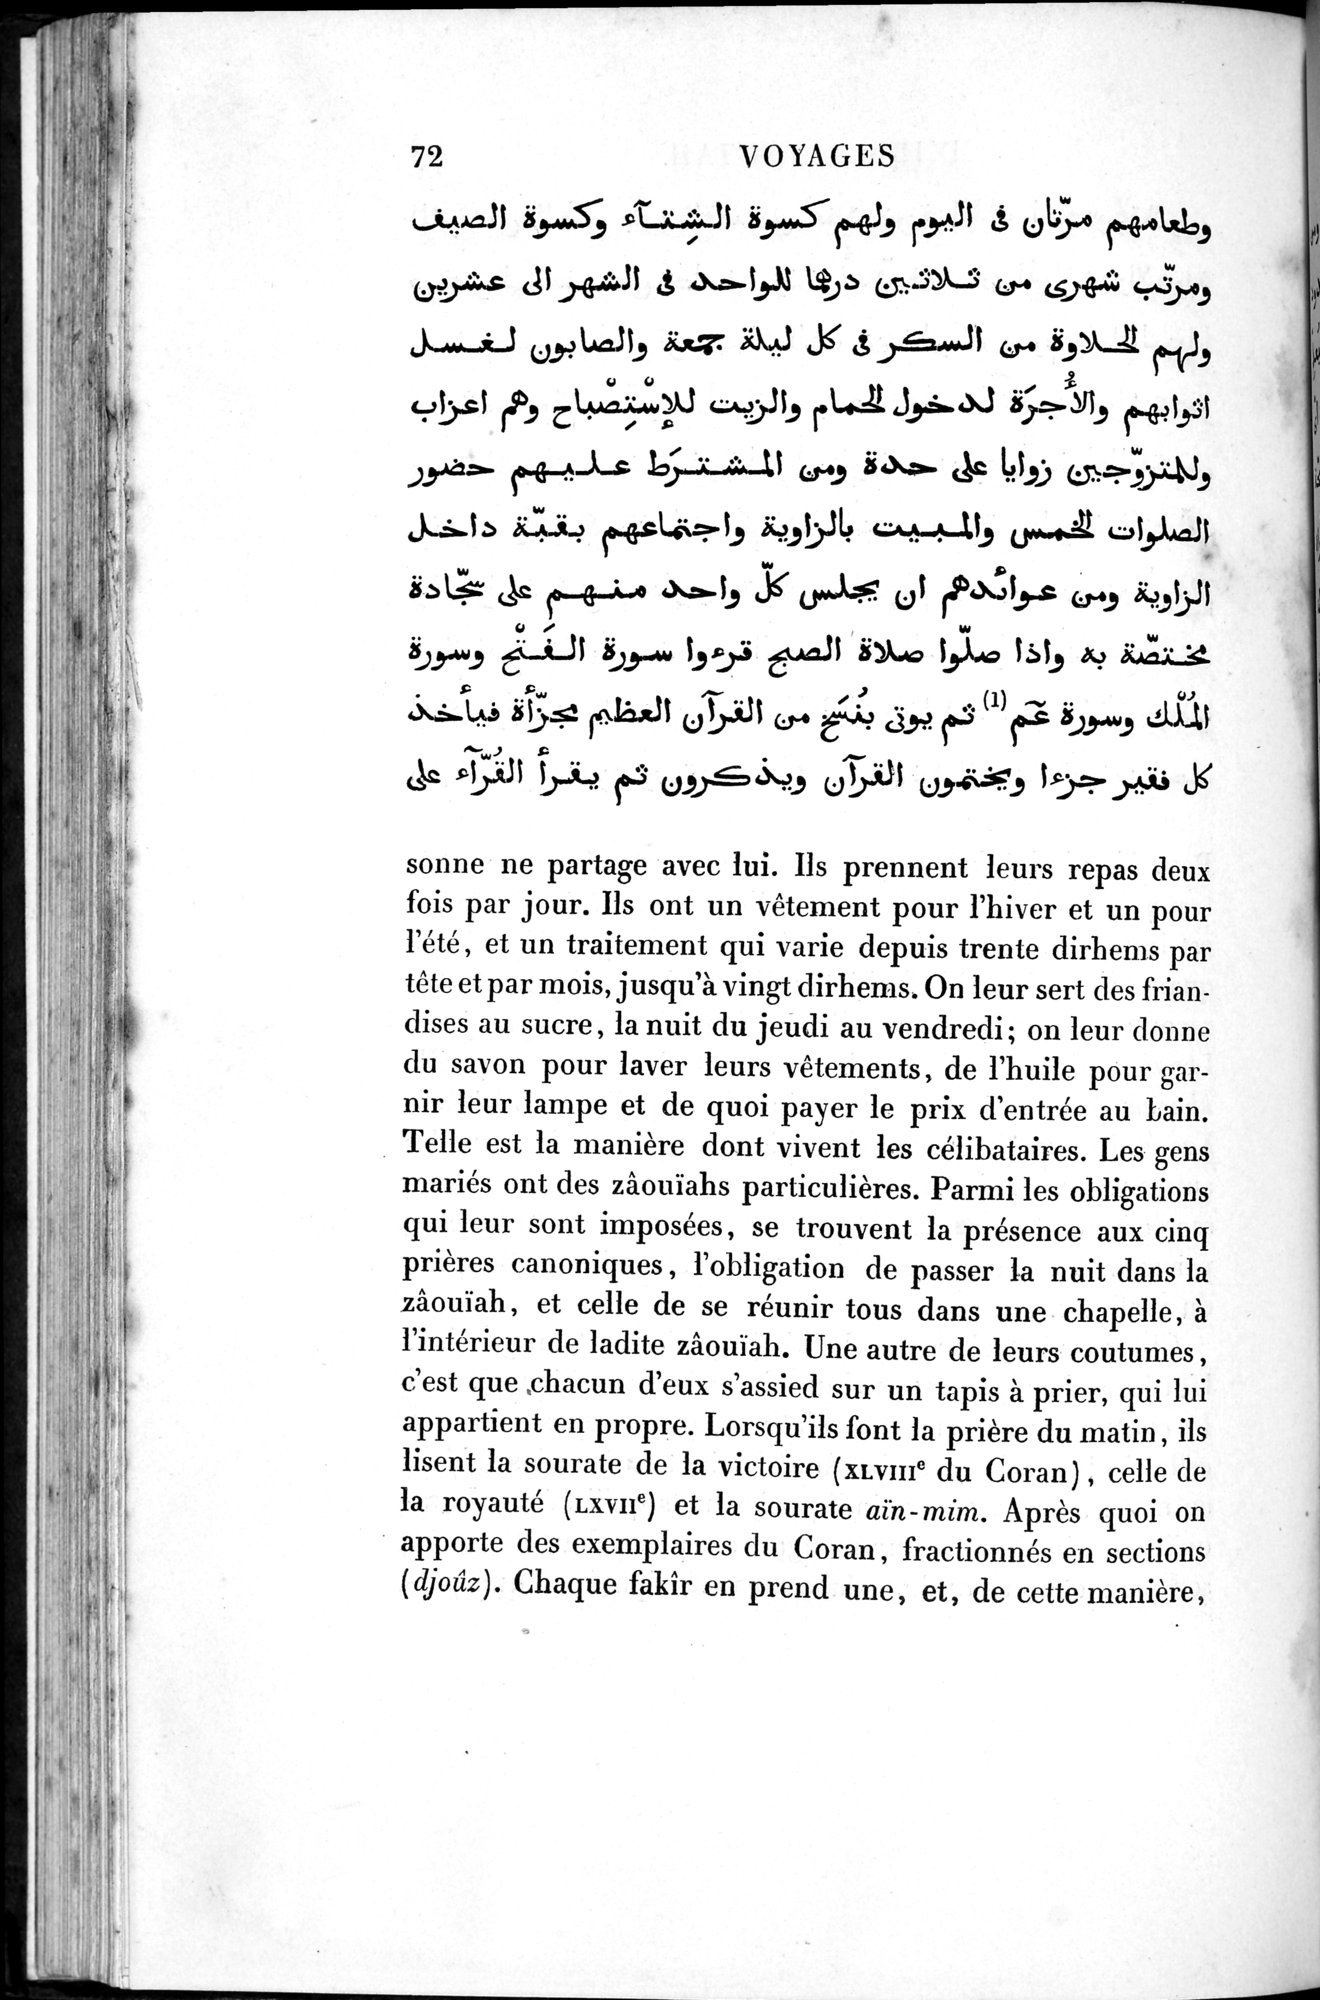 Voyages d'Ibn Batoutah : vol.1 / 132 ページ（白黒高解像度画像）